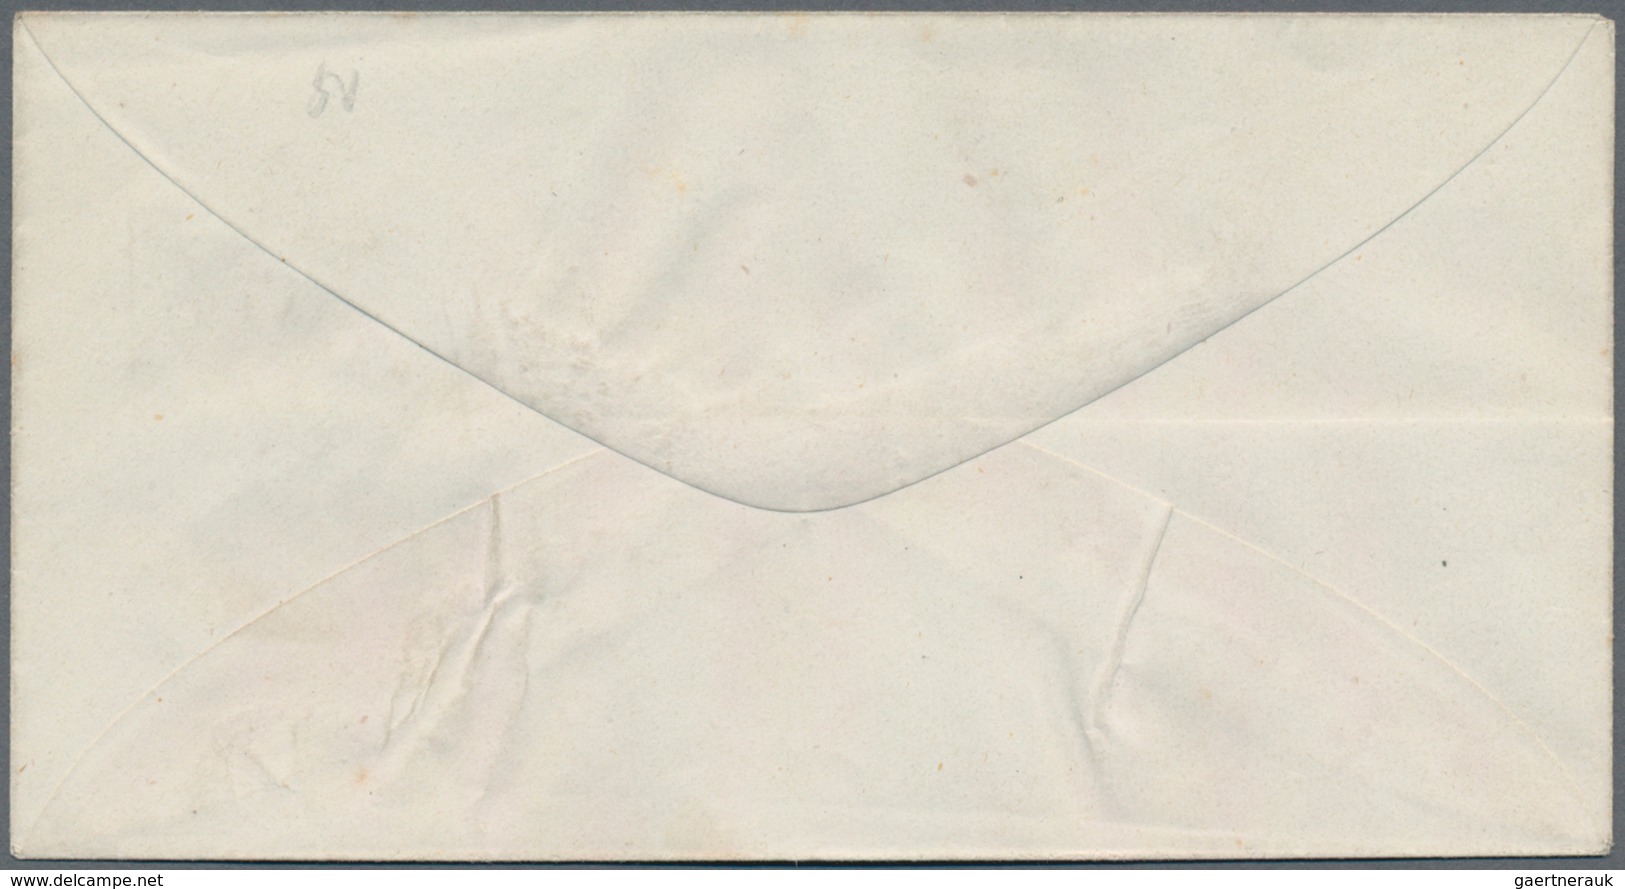 Rumänien - Ganzsachen: 1862-1864 (about) Project For The First Postal Stationery Envelopes Of Romani - Ganzsachen